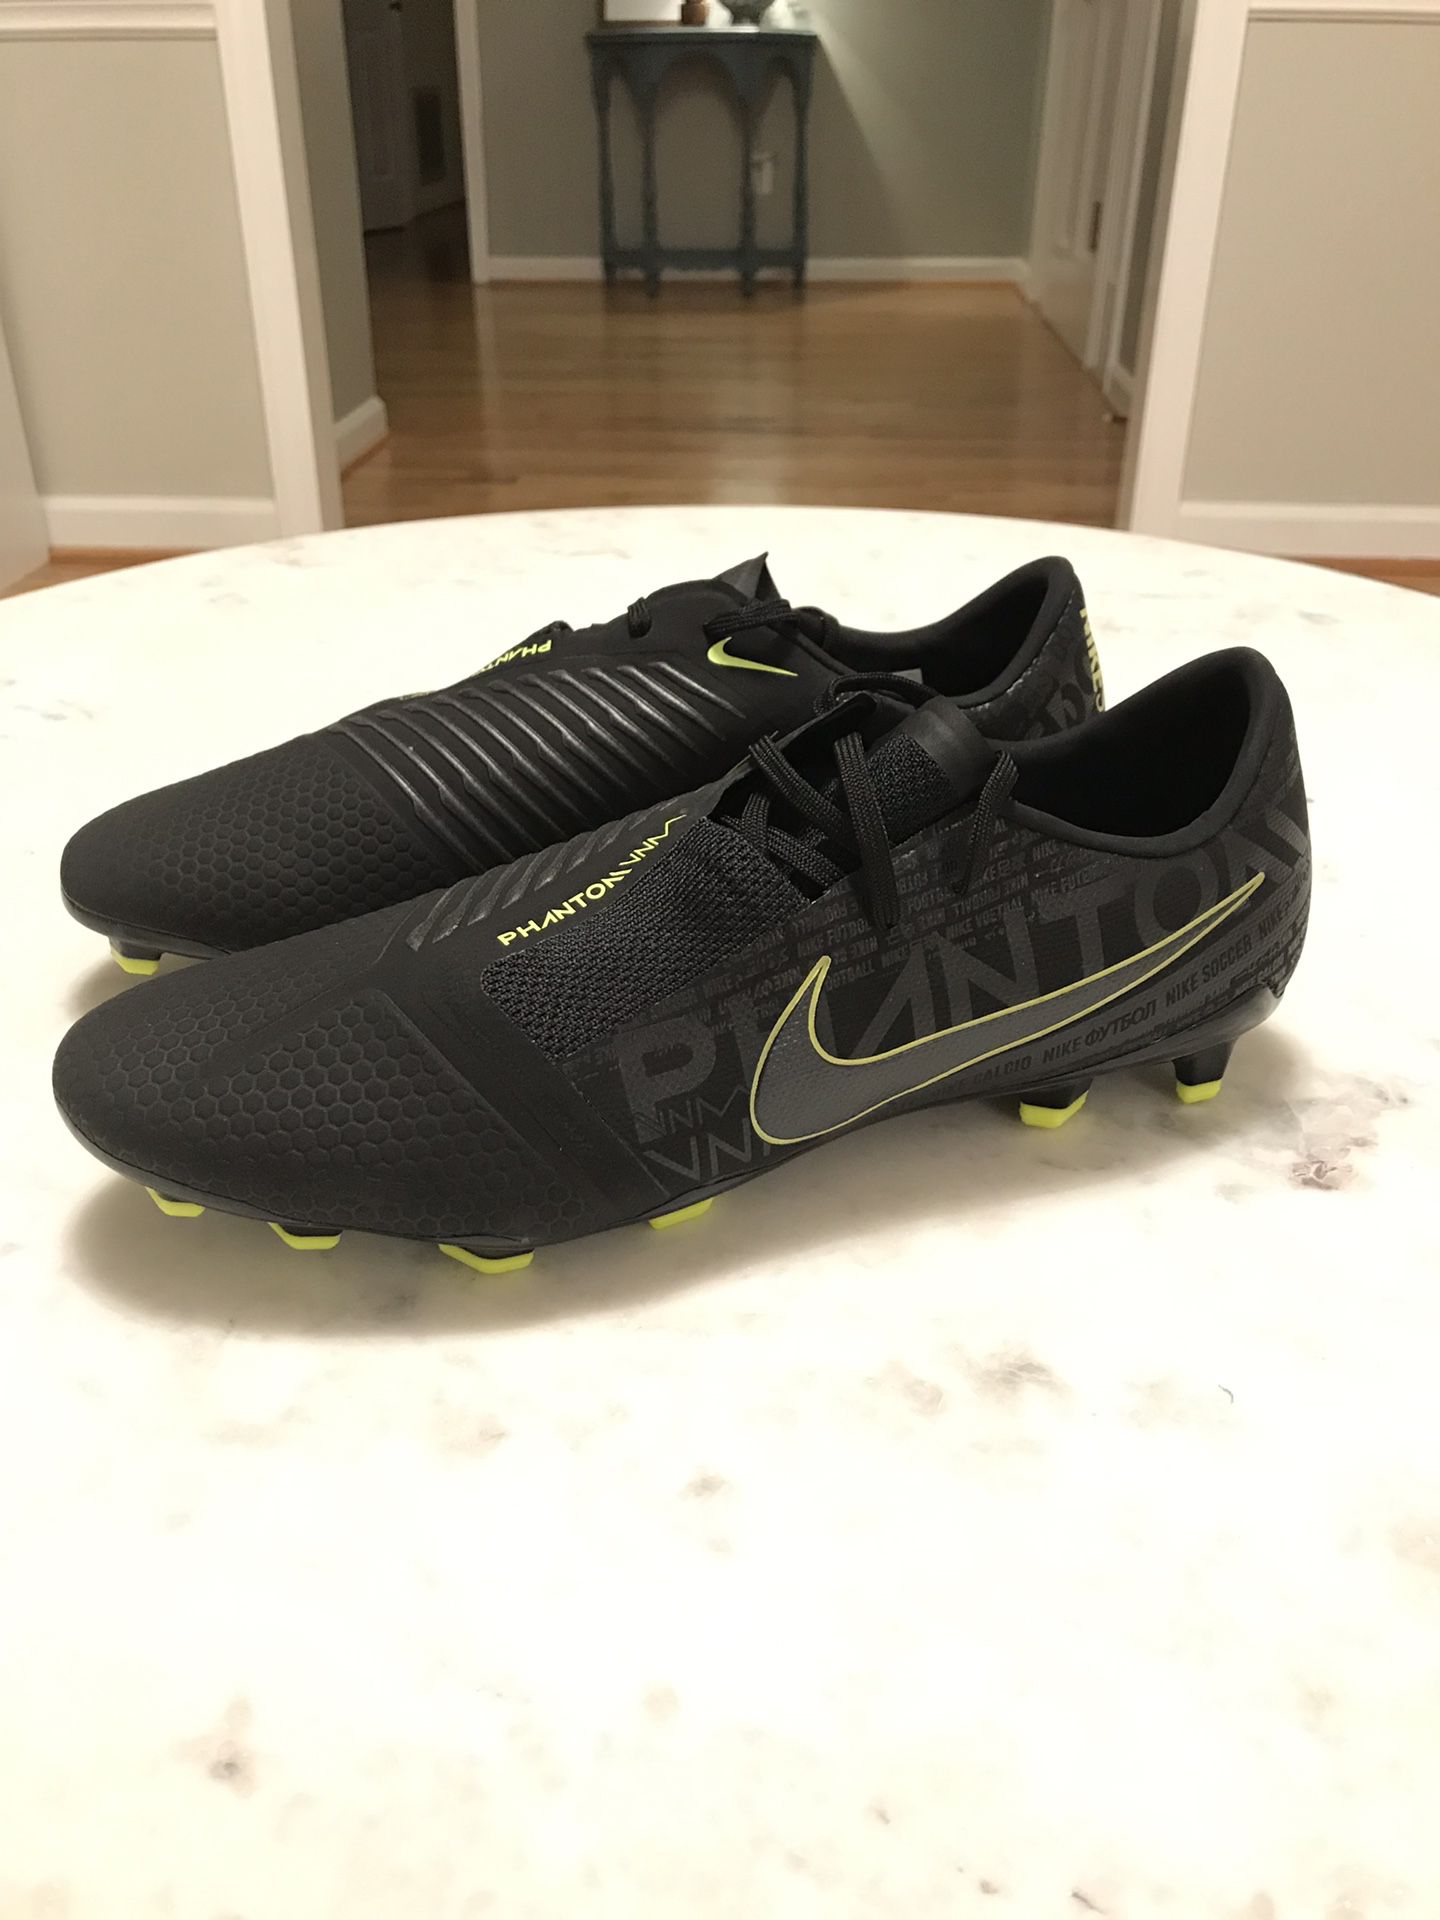 Nike Phantom Venom Pro FG Soccer Cleats Size 12